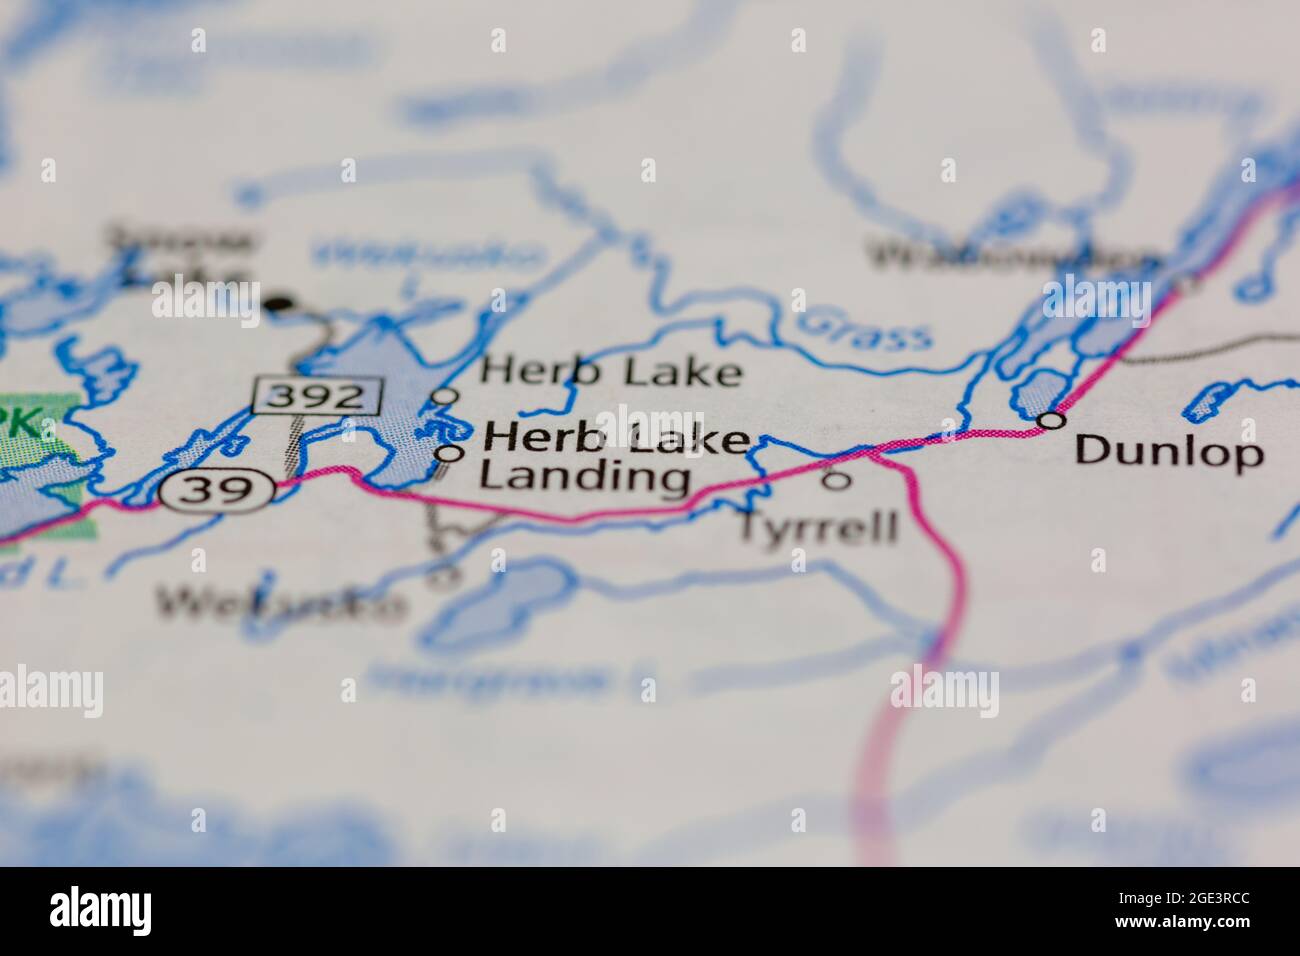 Herb Lake Landing Saskatchewan Canada visualizzato su una mappa stradale o mappa geografica Foto Stock